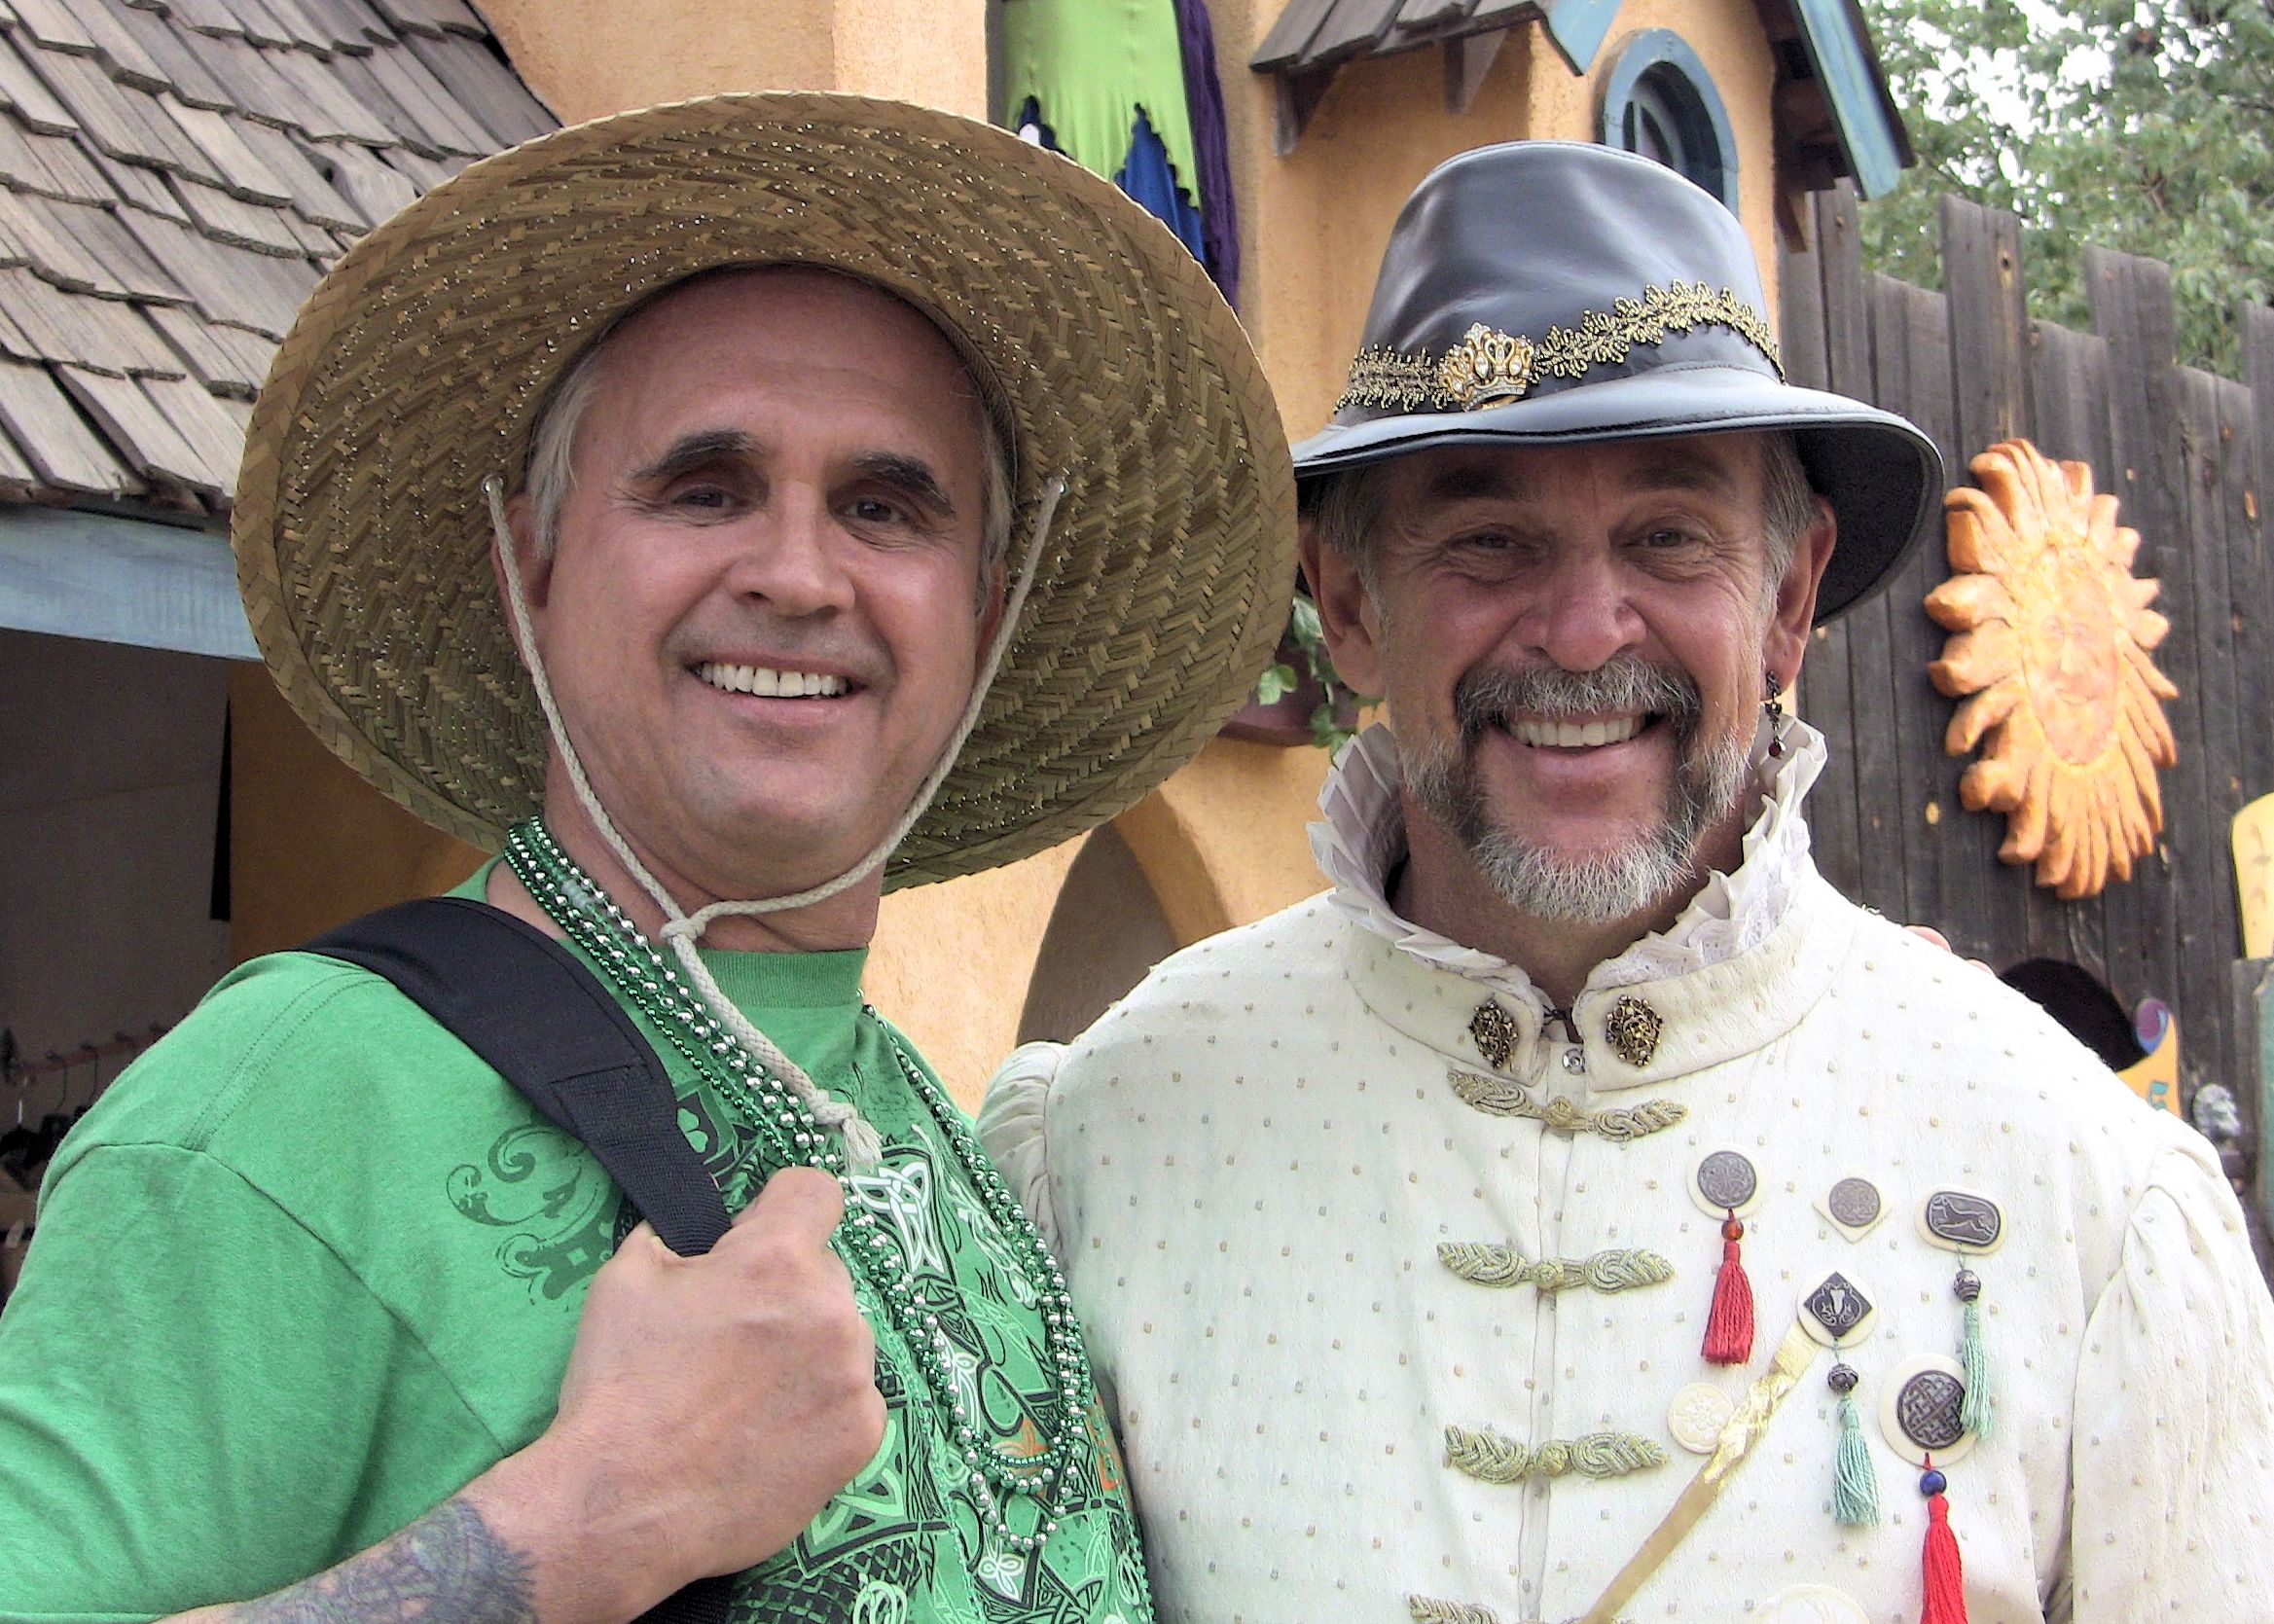 St. Patrick's Day 2012 at the AZ Renaissance Festival with the King, Jon T Benda